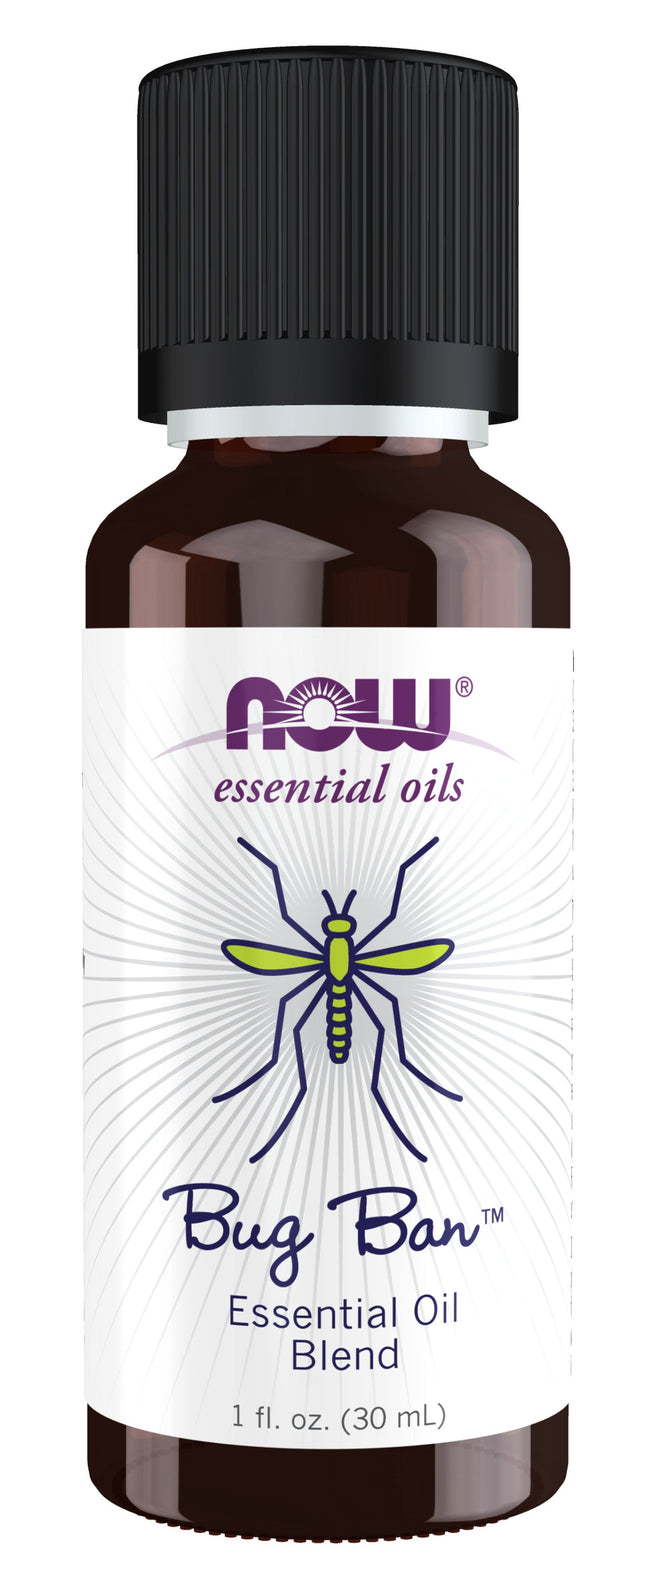 Bug Ban™ Essential Oil Blend